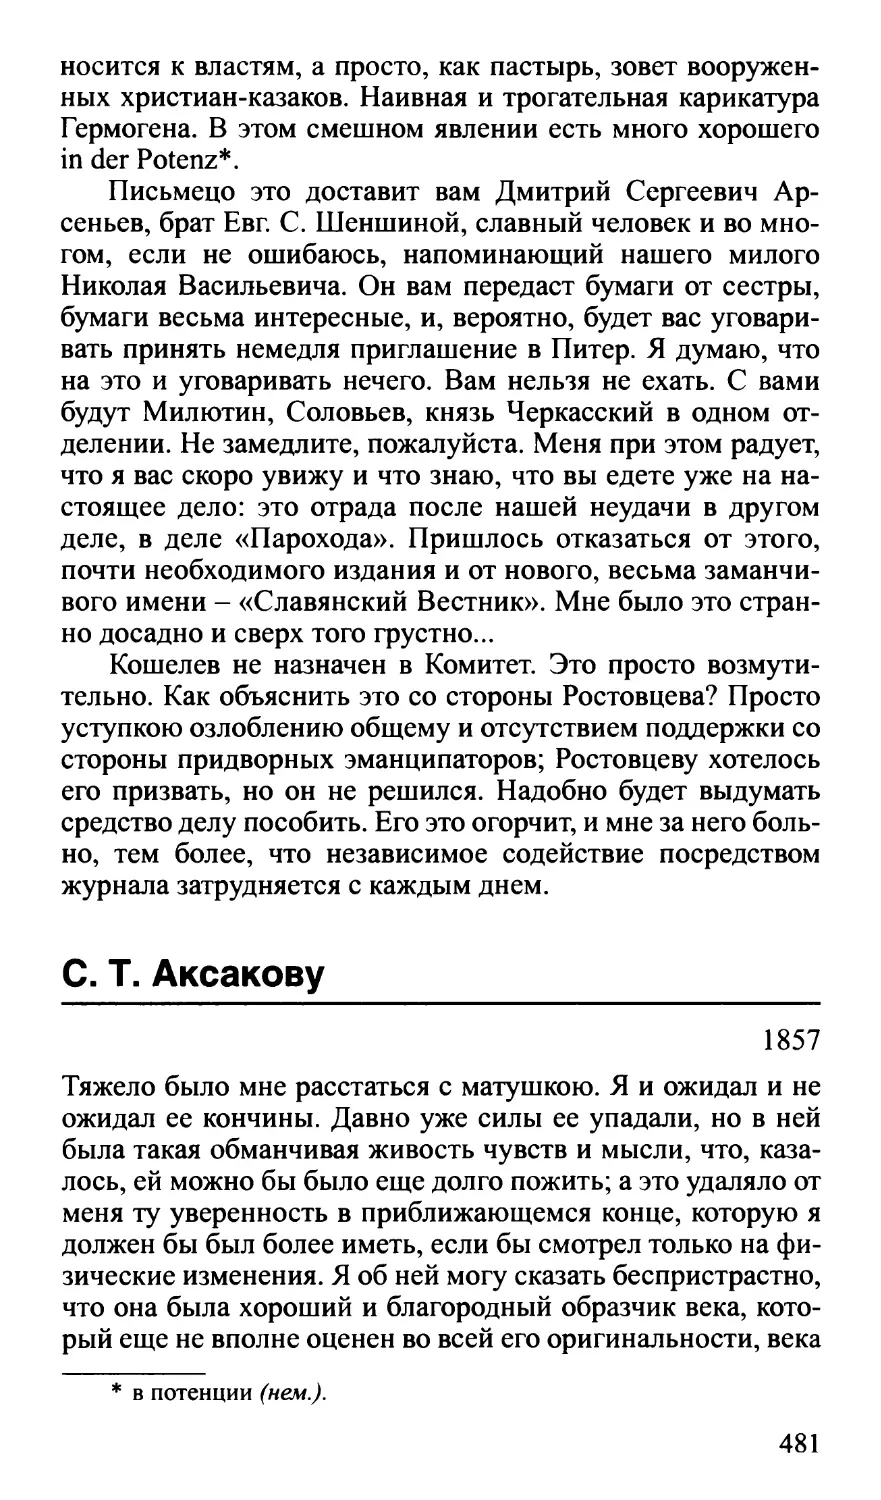 С.Т. Аксакову. 1857 г.